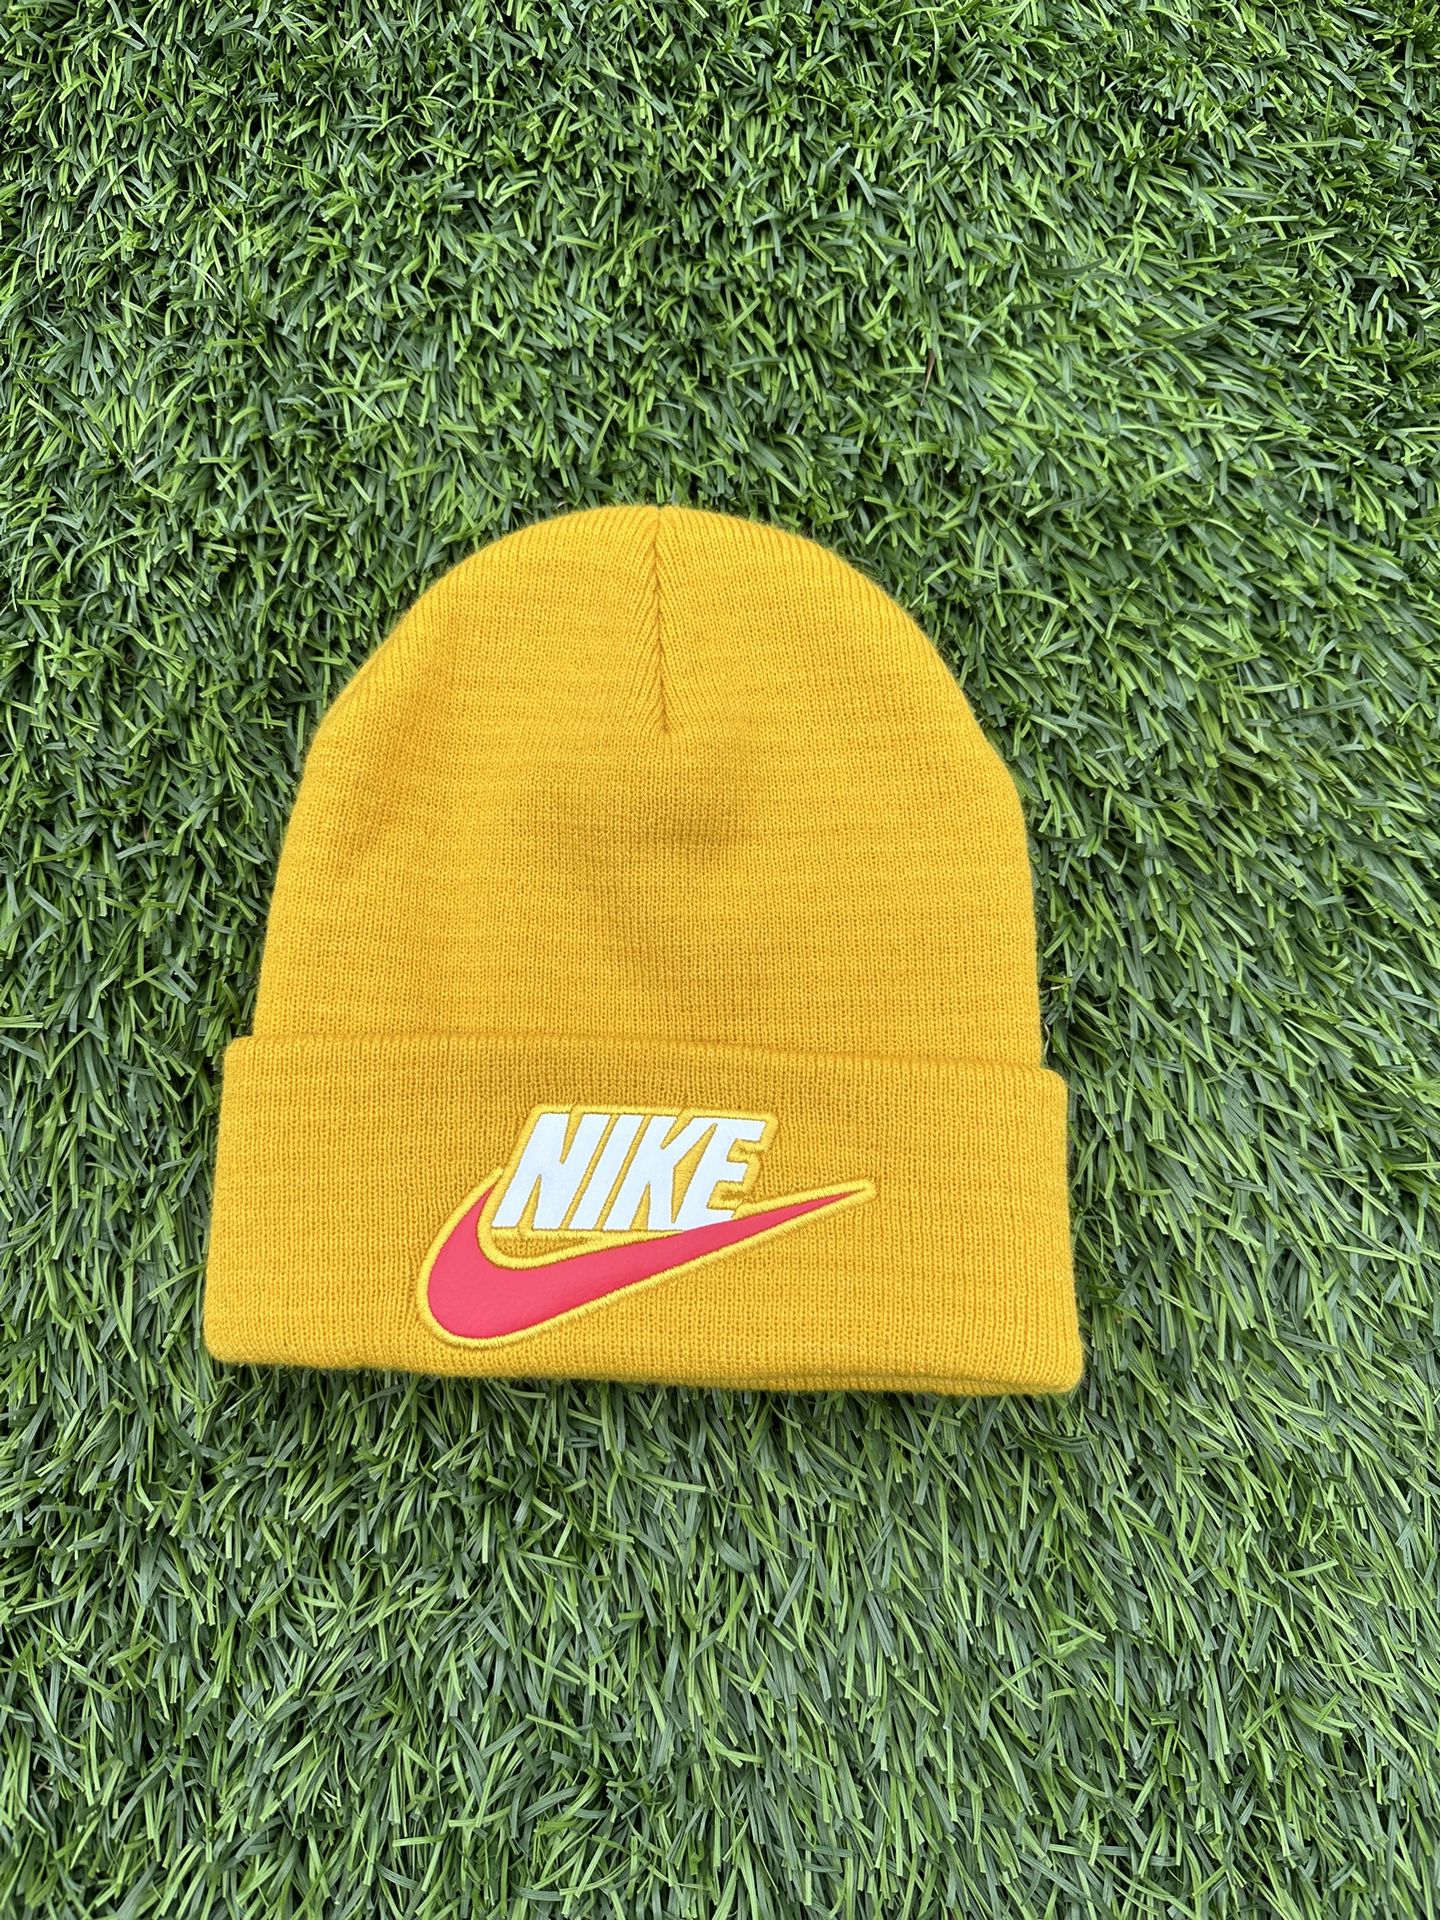 Used ONCE Supreme Nike Beanie Mustard Hat